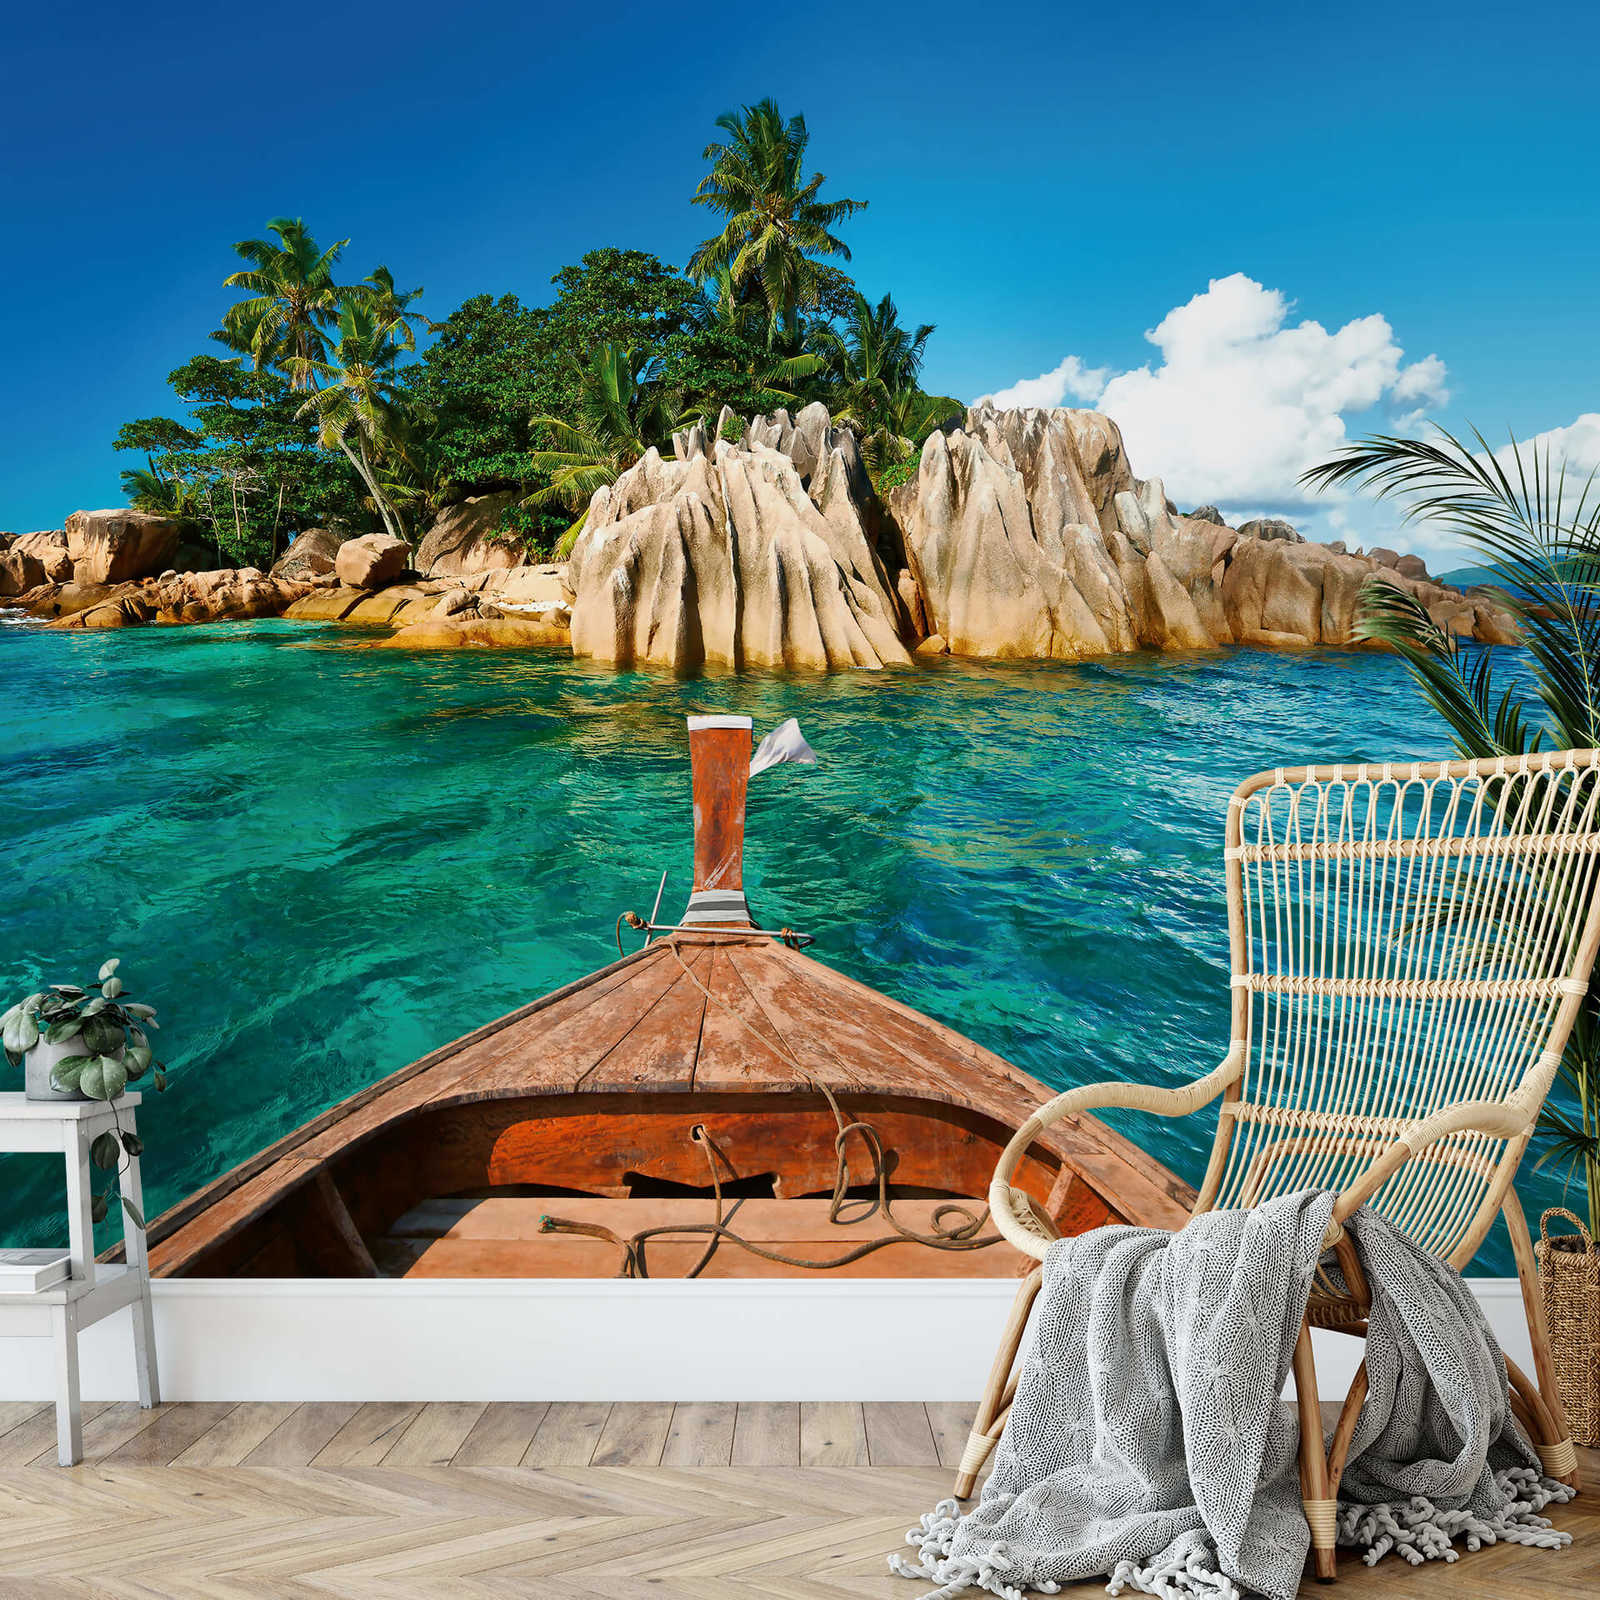             Photo wallpaper Seychelles island in the sea - blue, brown, green
        